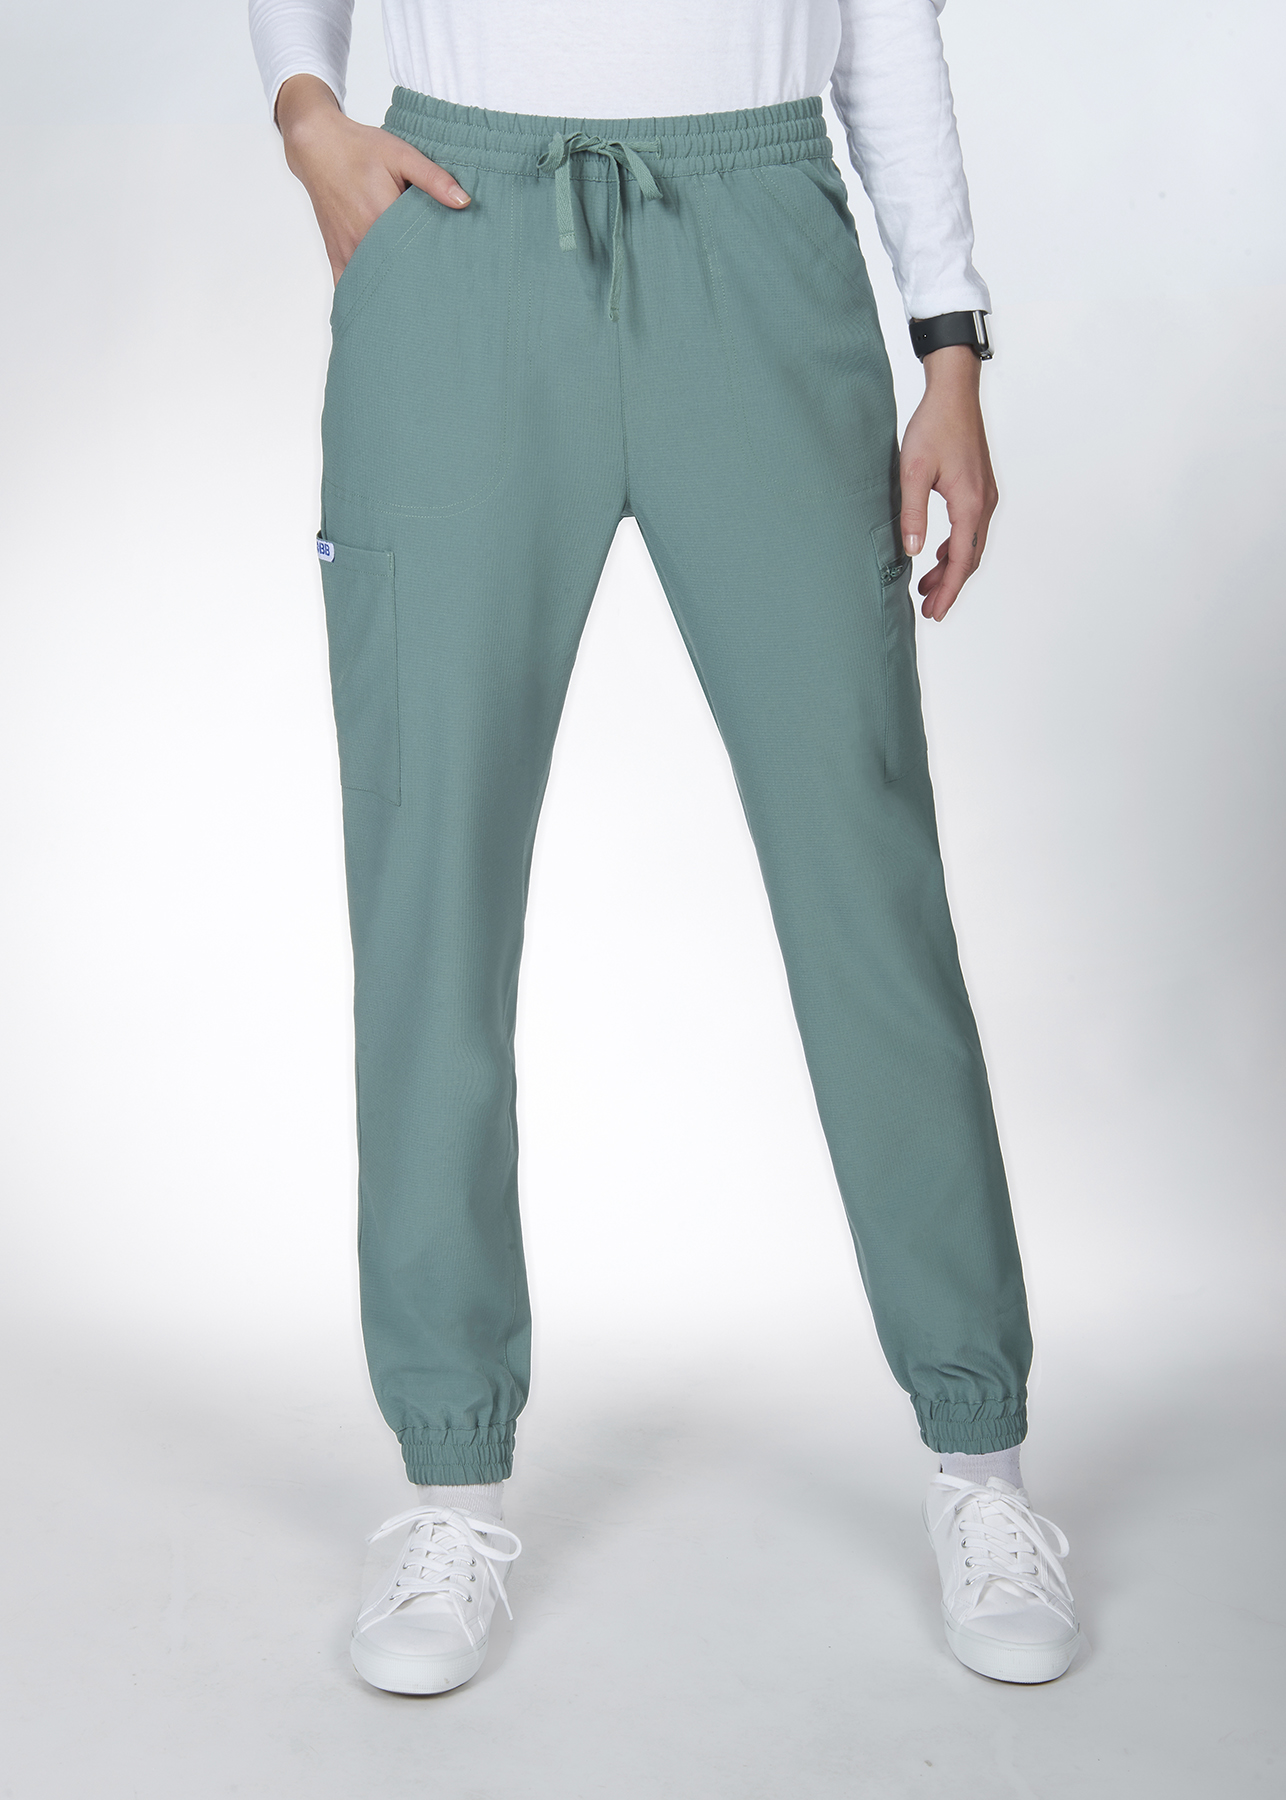 MOBB Medical Uniforms - Nurse Wear Scrubs - Chef Wear - Universal Work ...